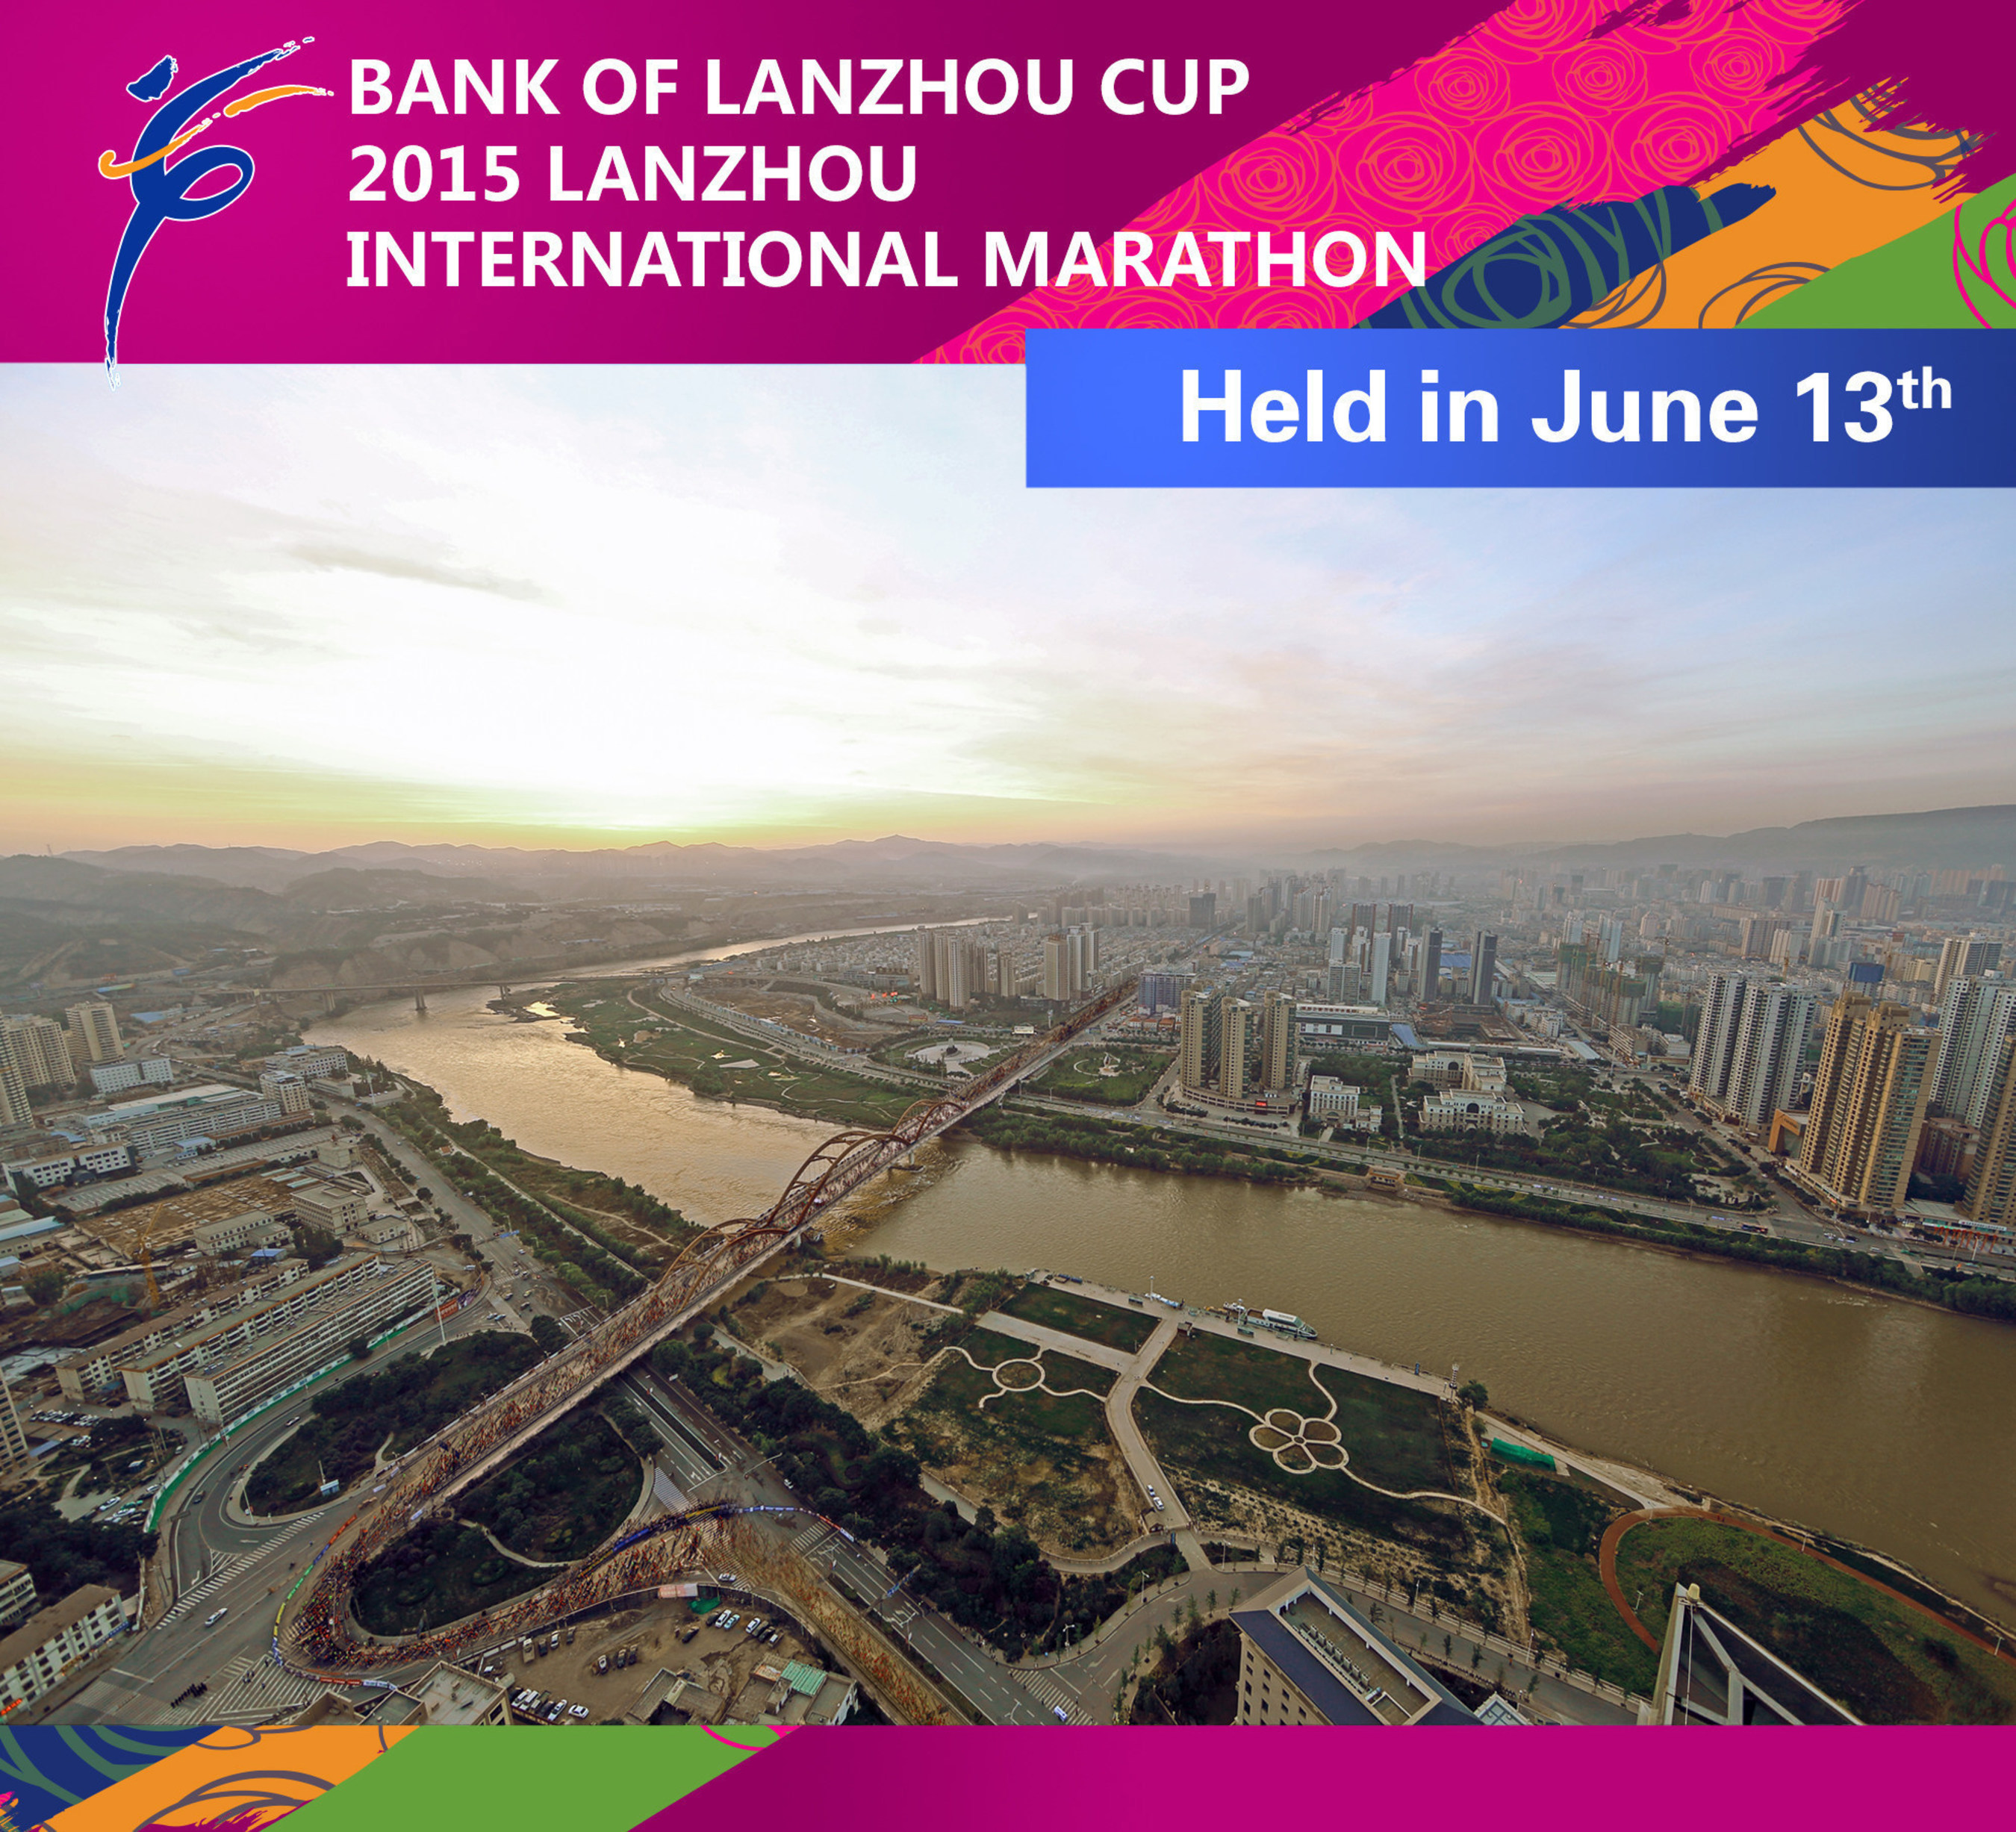 The 2015 Bank of Lanzhou international marathon was held on June 13.